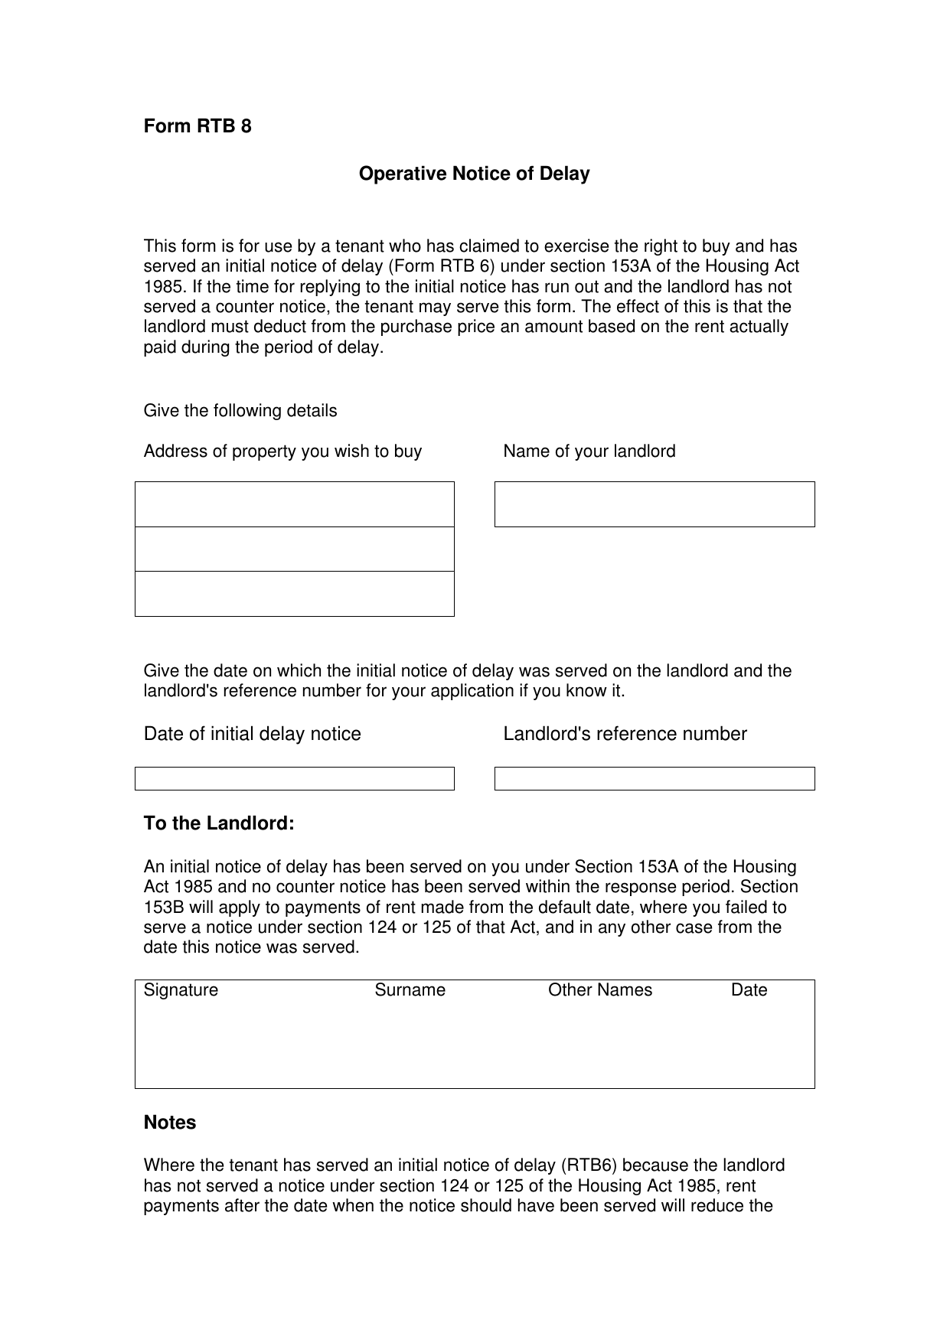 Form RTB8 Operative Notice of Delay - United Kingdom, Page 1